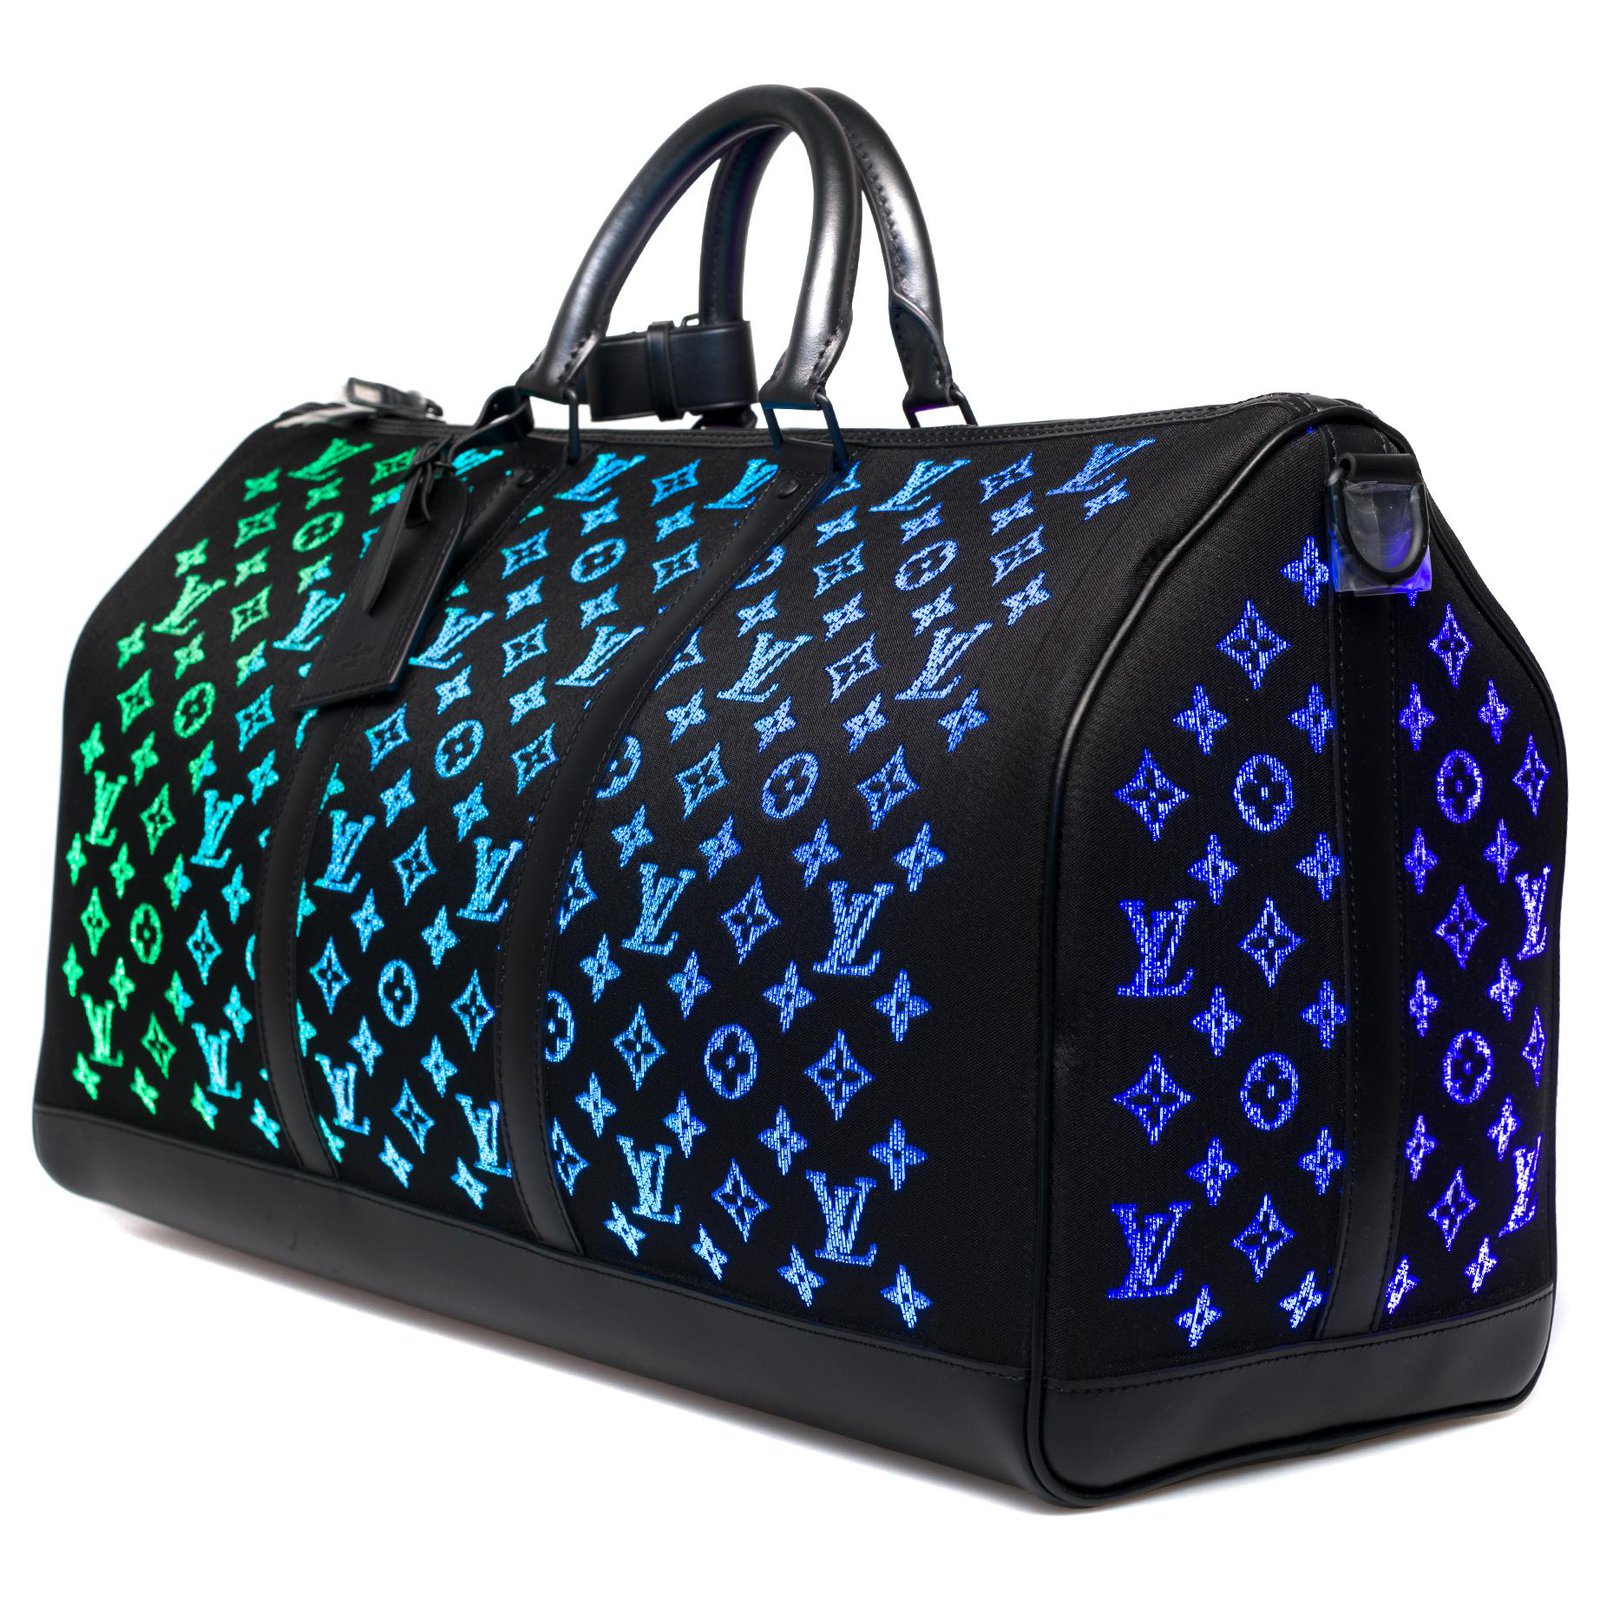 Super rare 1 of 9 Louis Vuitton Keepall Light Up cloth travel bag!! Ow